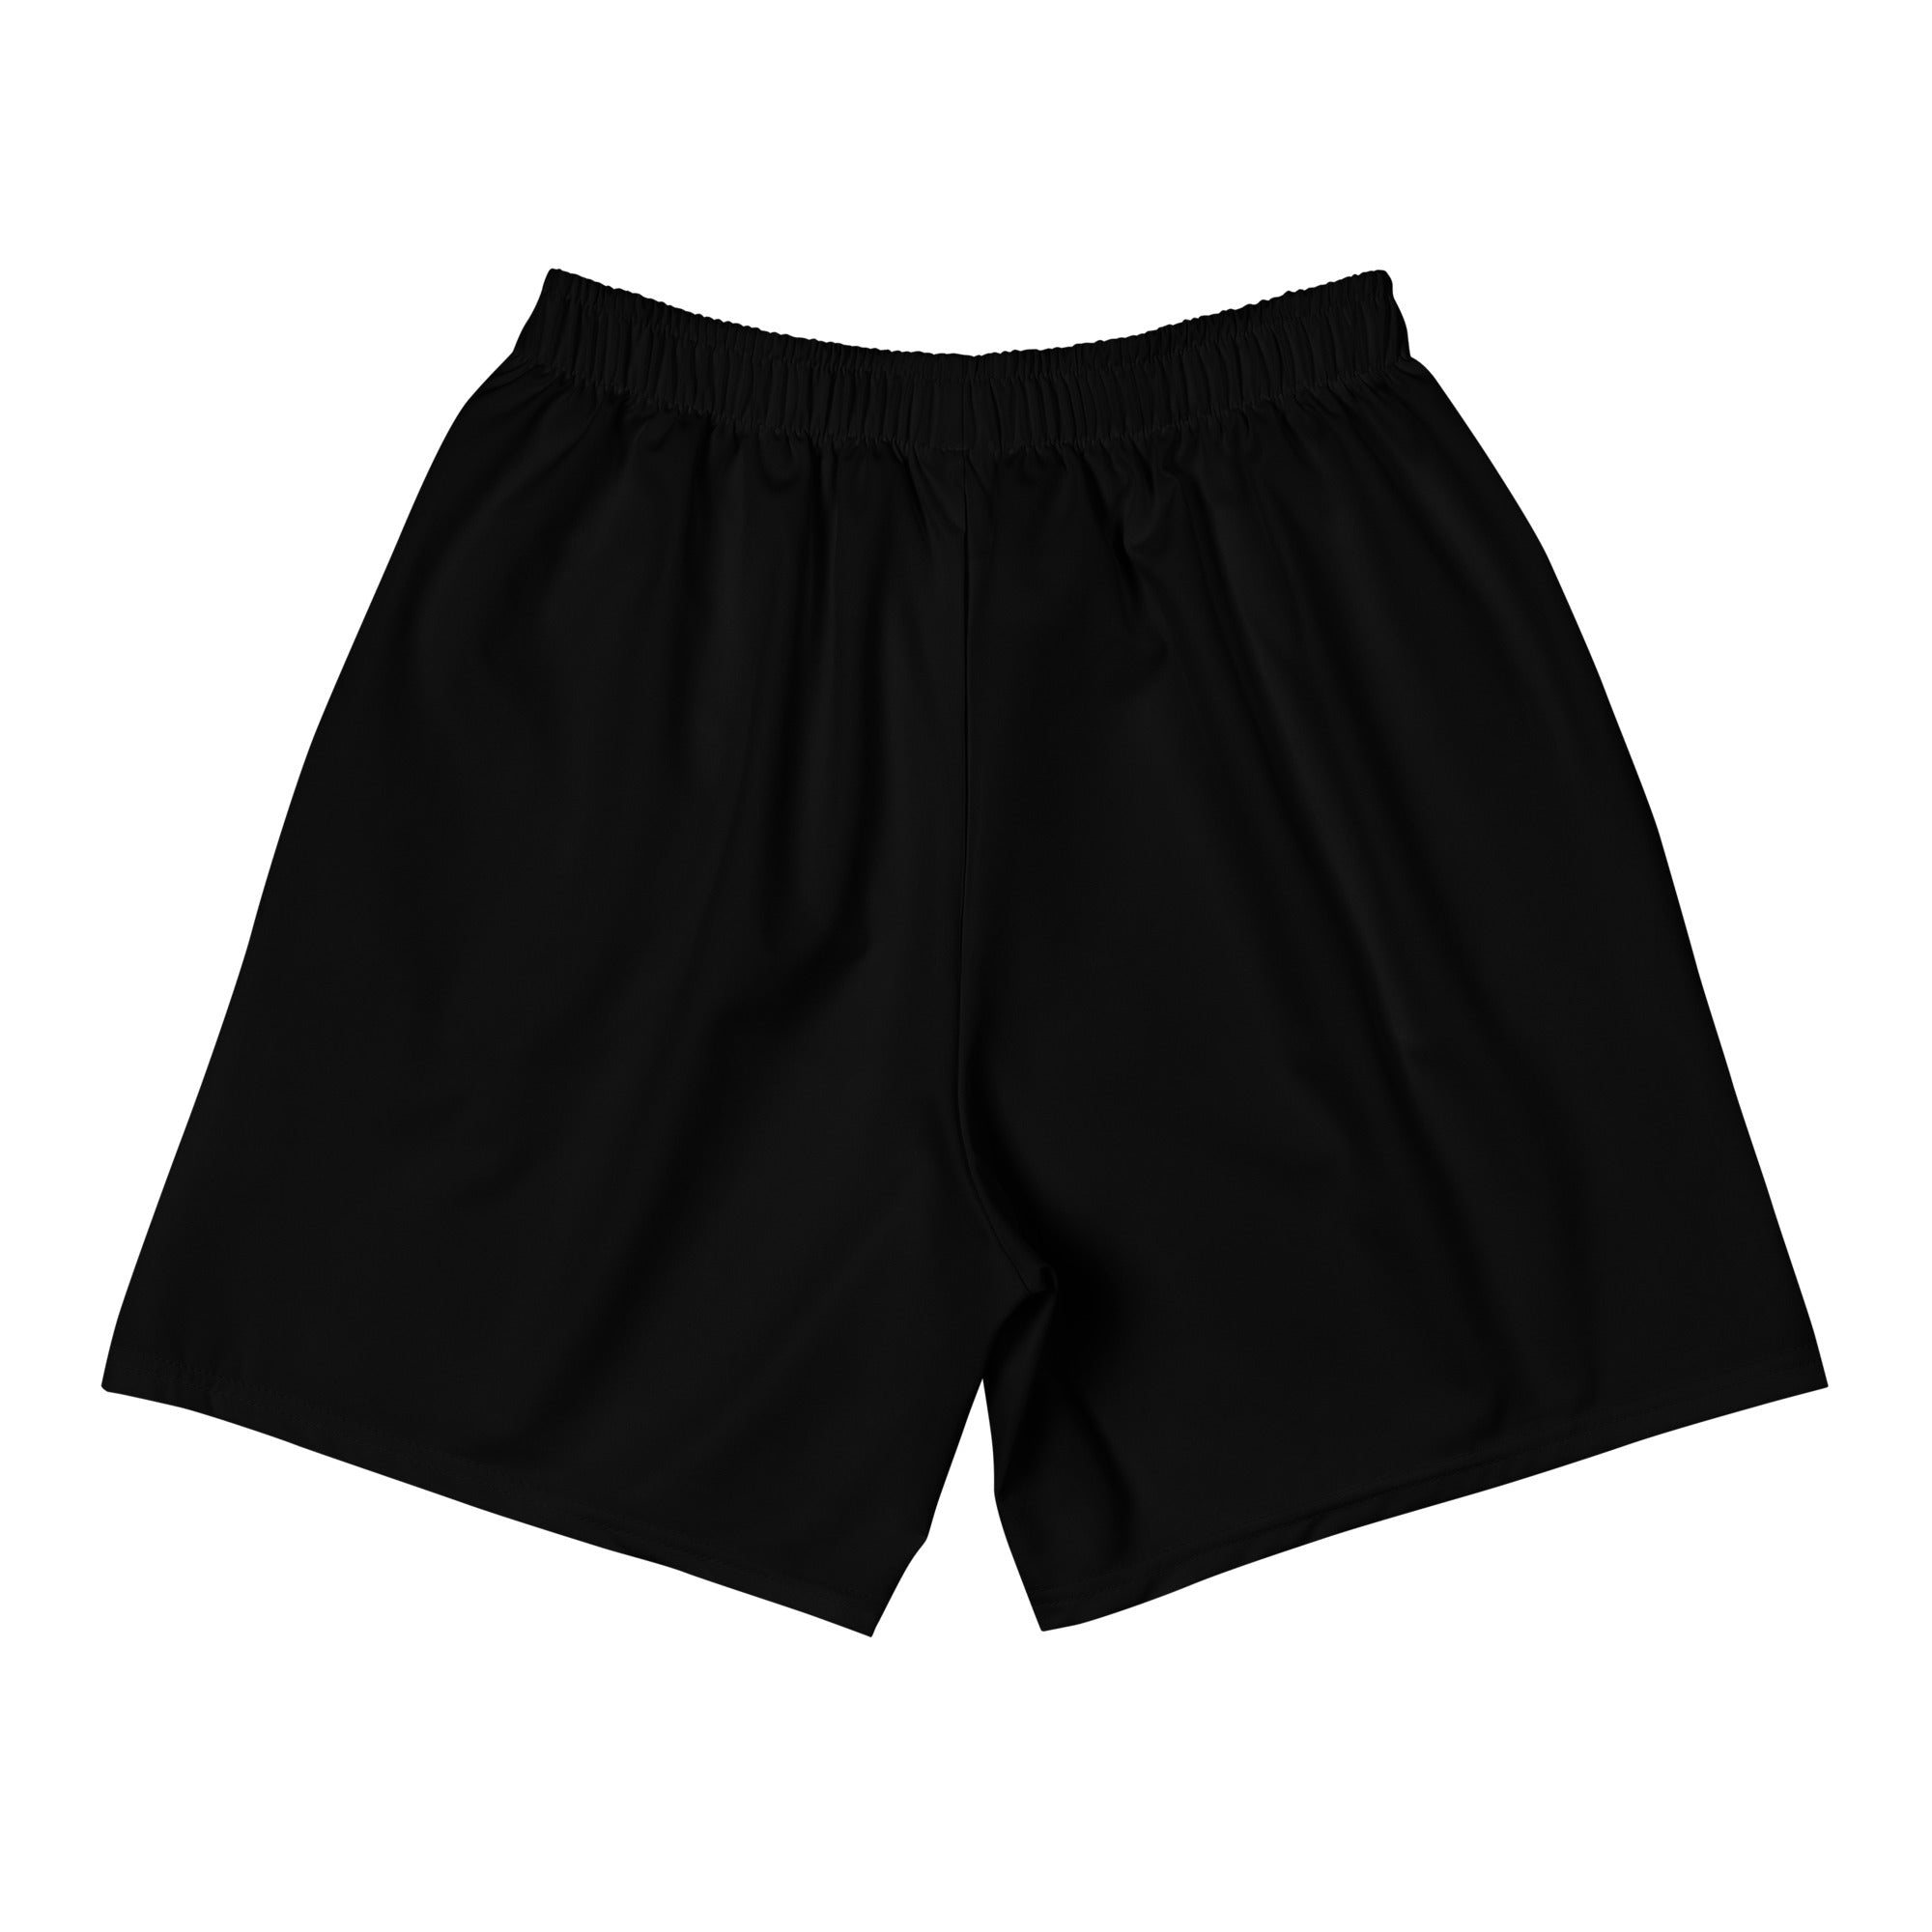 "The Jiu Jitsu Ram" Men's Athletic Training Shorts (Black)